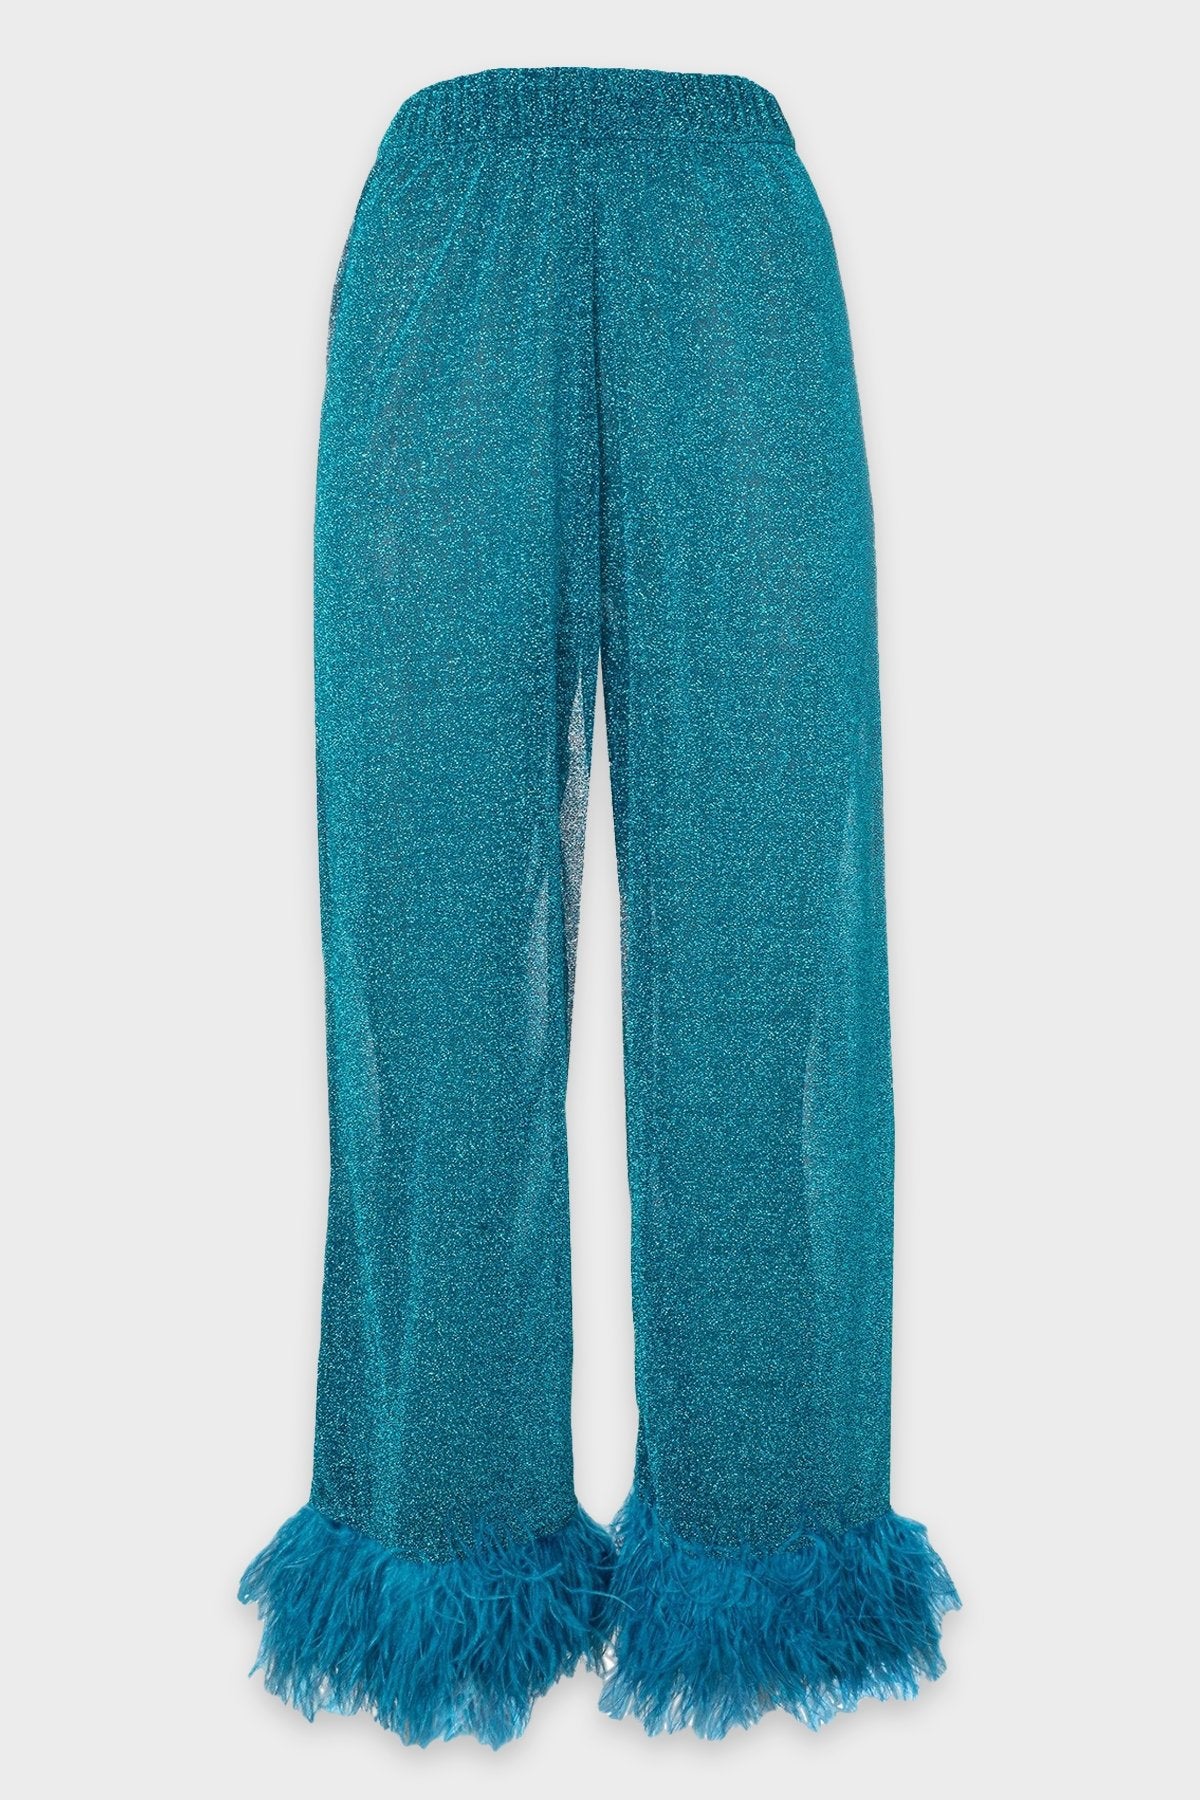 Lumière Plumage Pants in Ocean Blue - shop-olivia.com